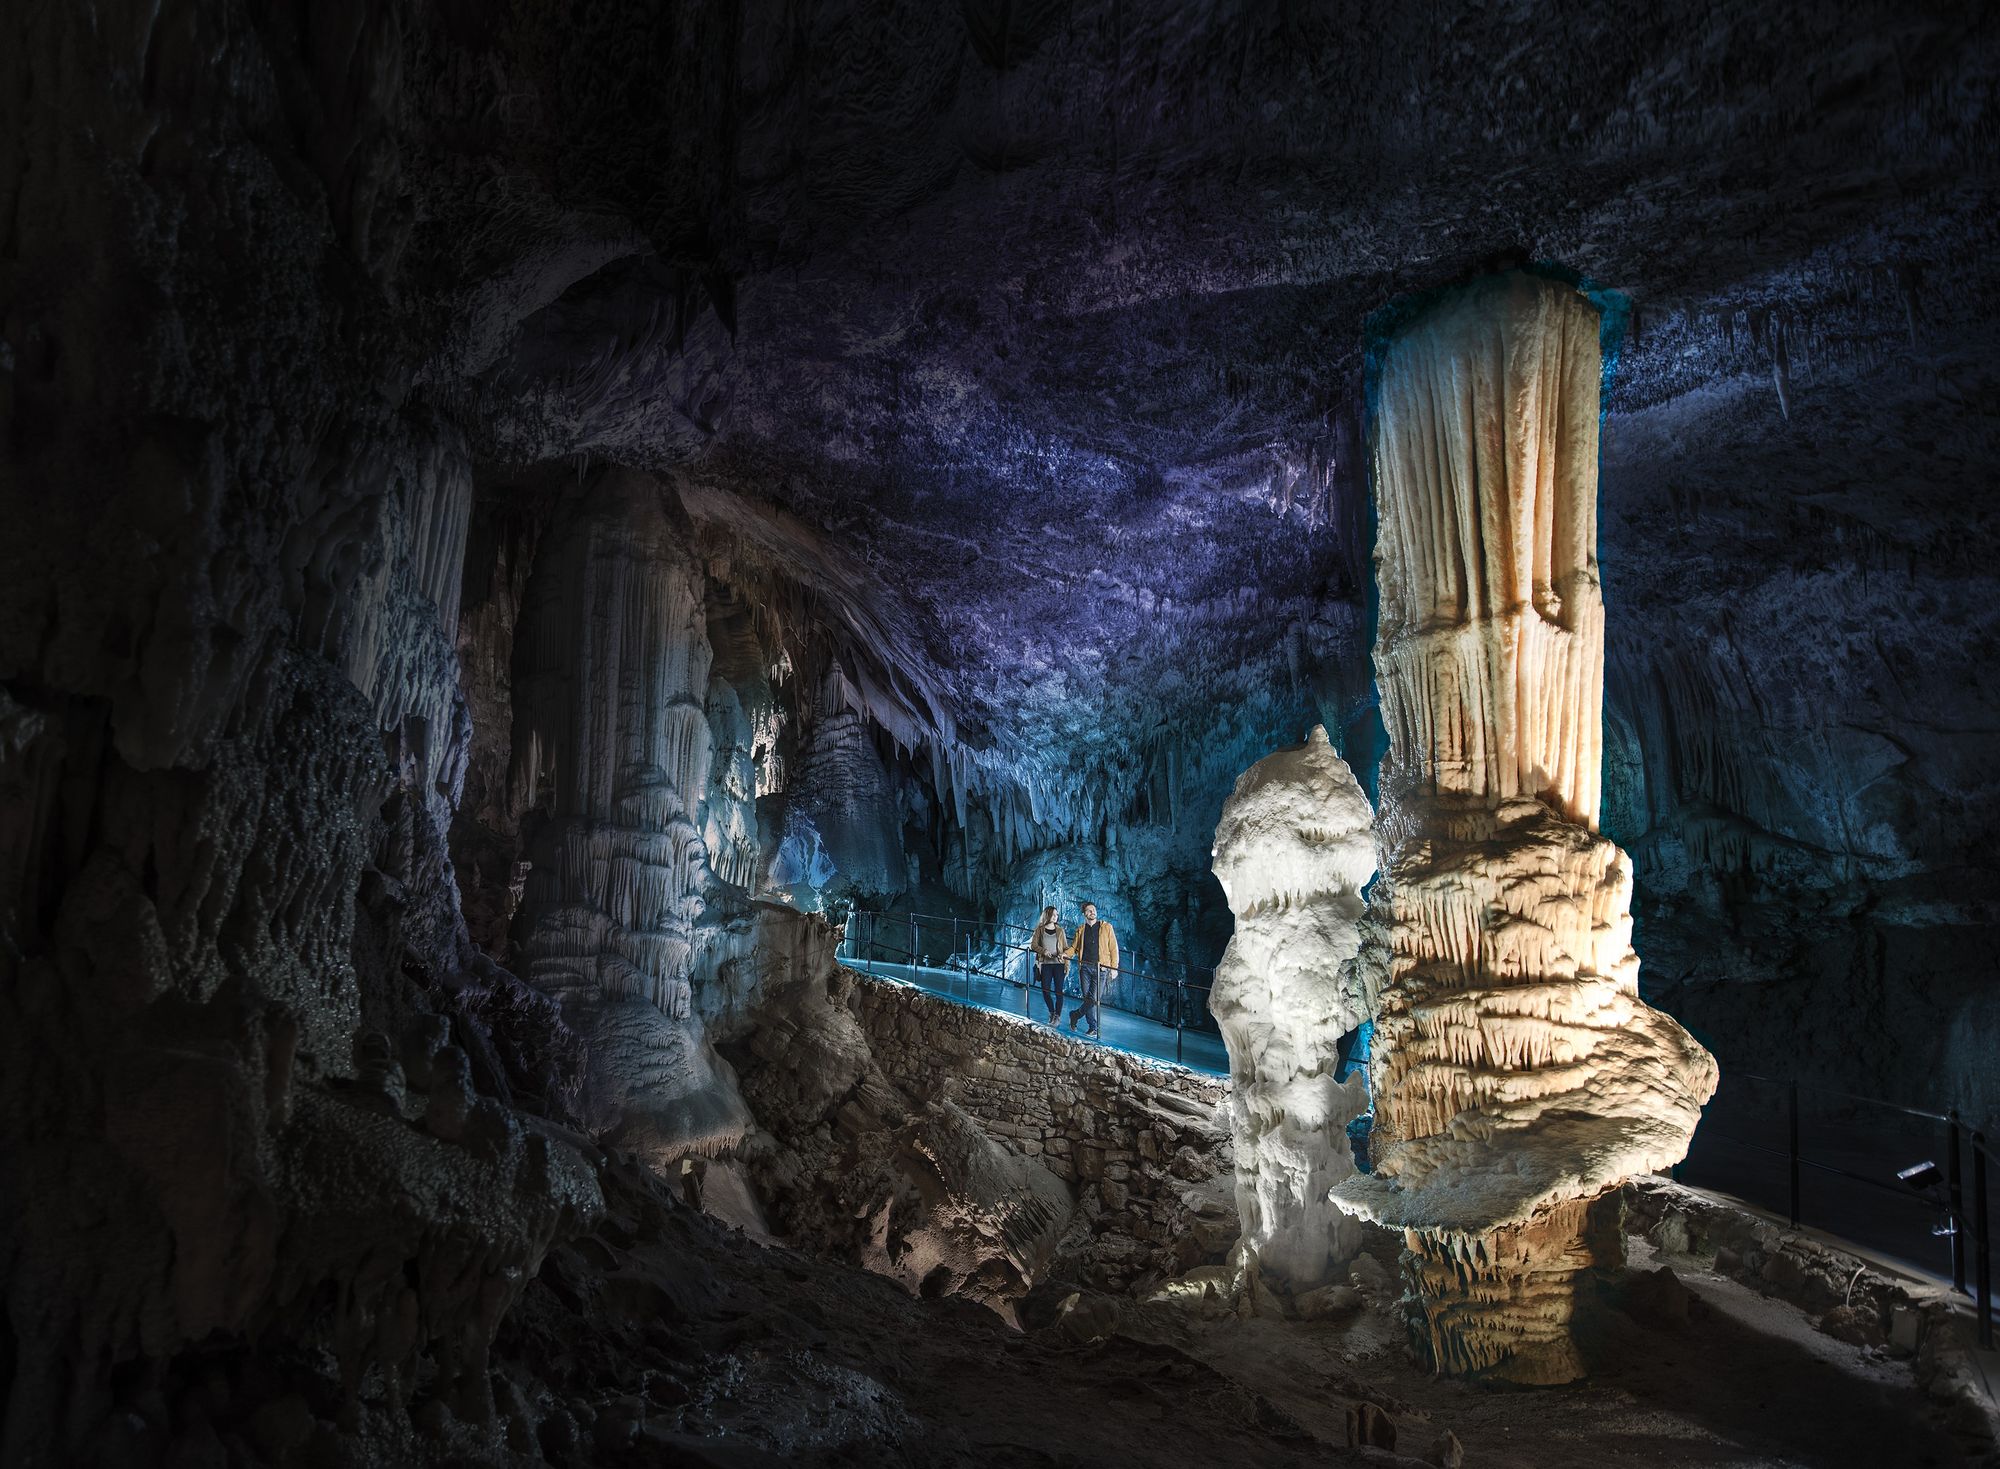 Unieke ervaring: Bezoek de Postojnska Grotten in Slovenië